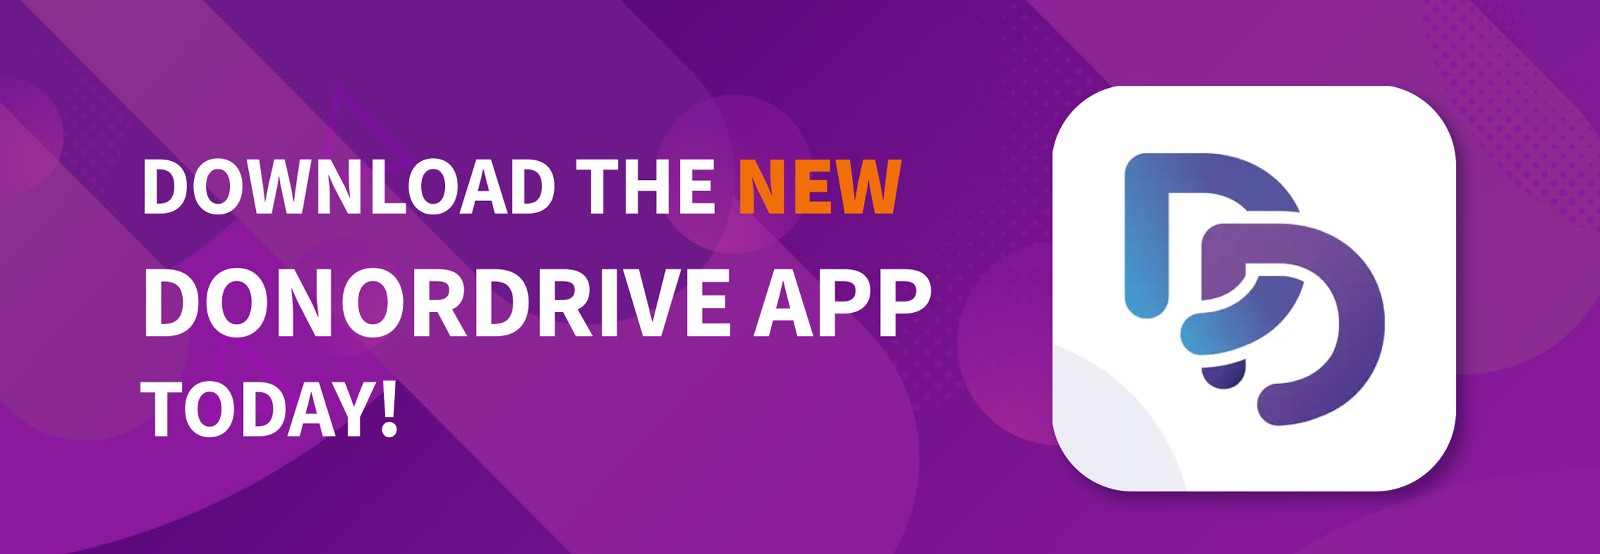 DonorDrive Mobile App Logo